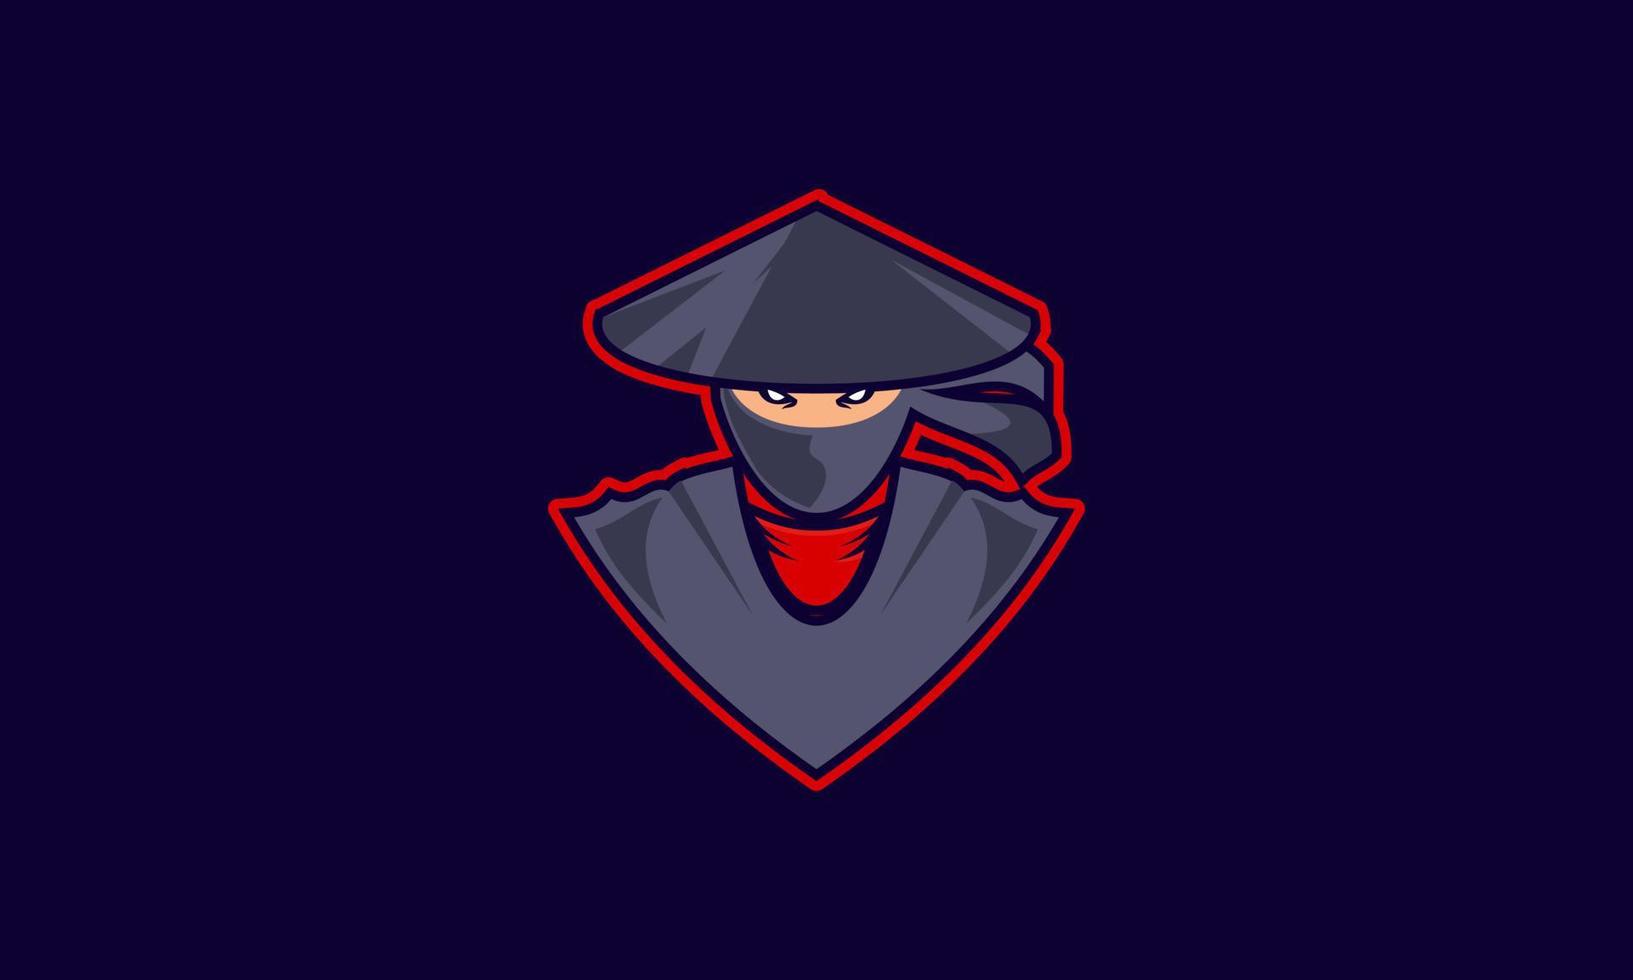 E-sport ninja mascot character logo vector